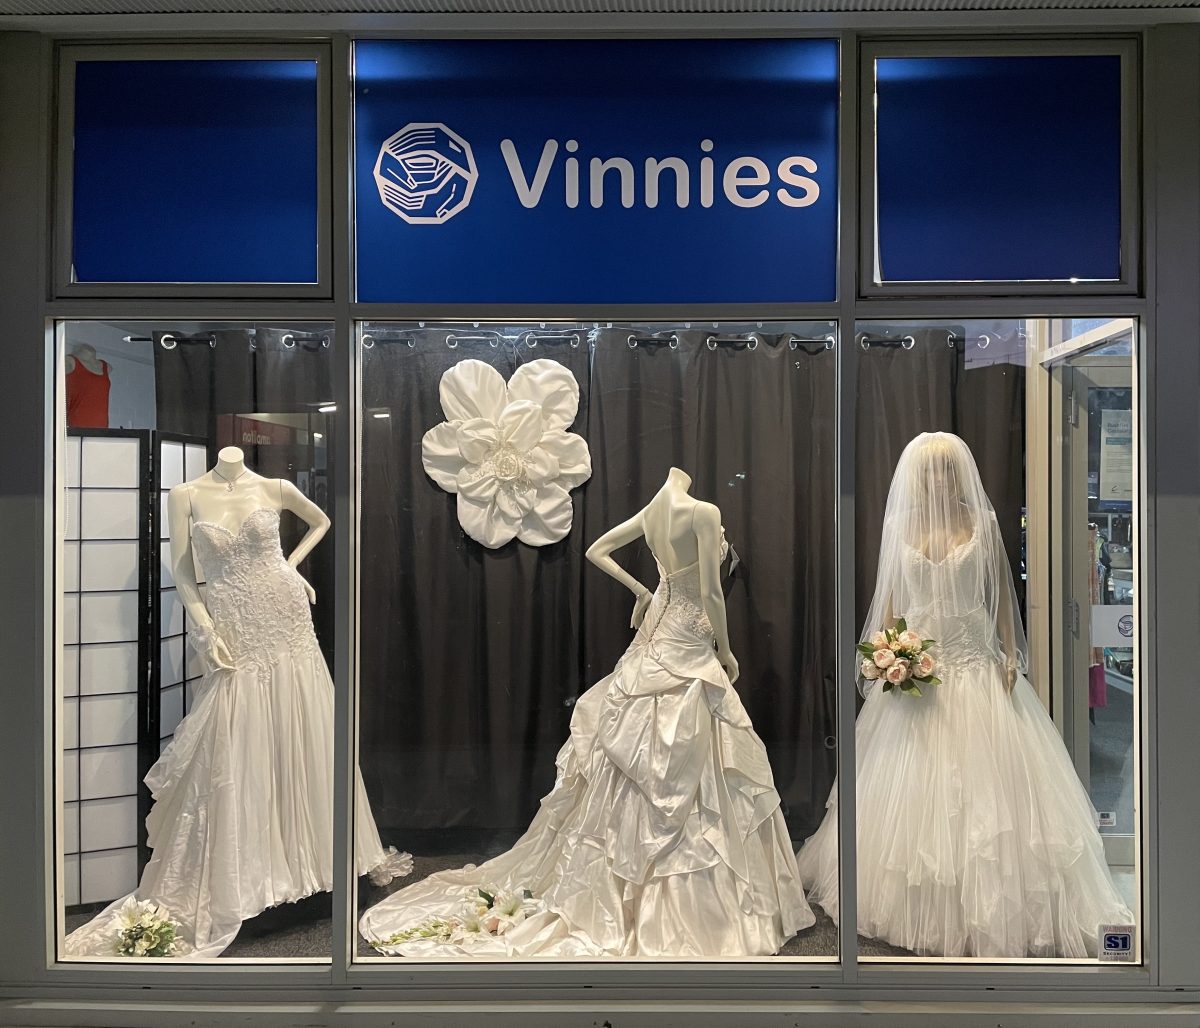 Wedding dresses in window display